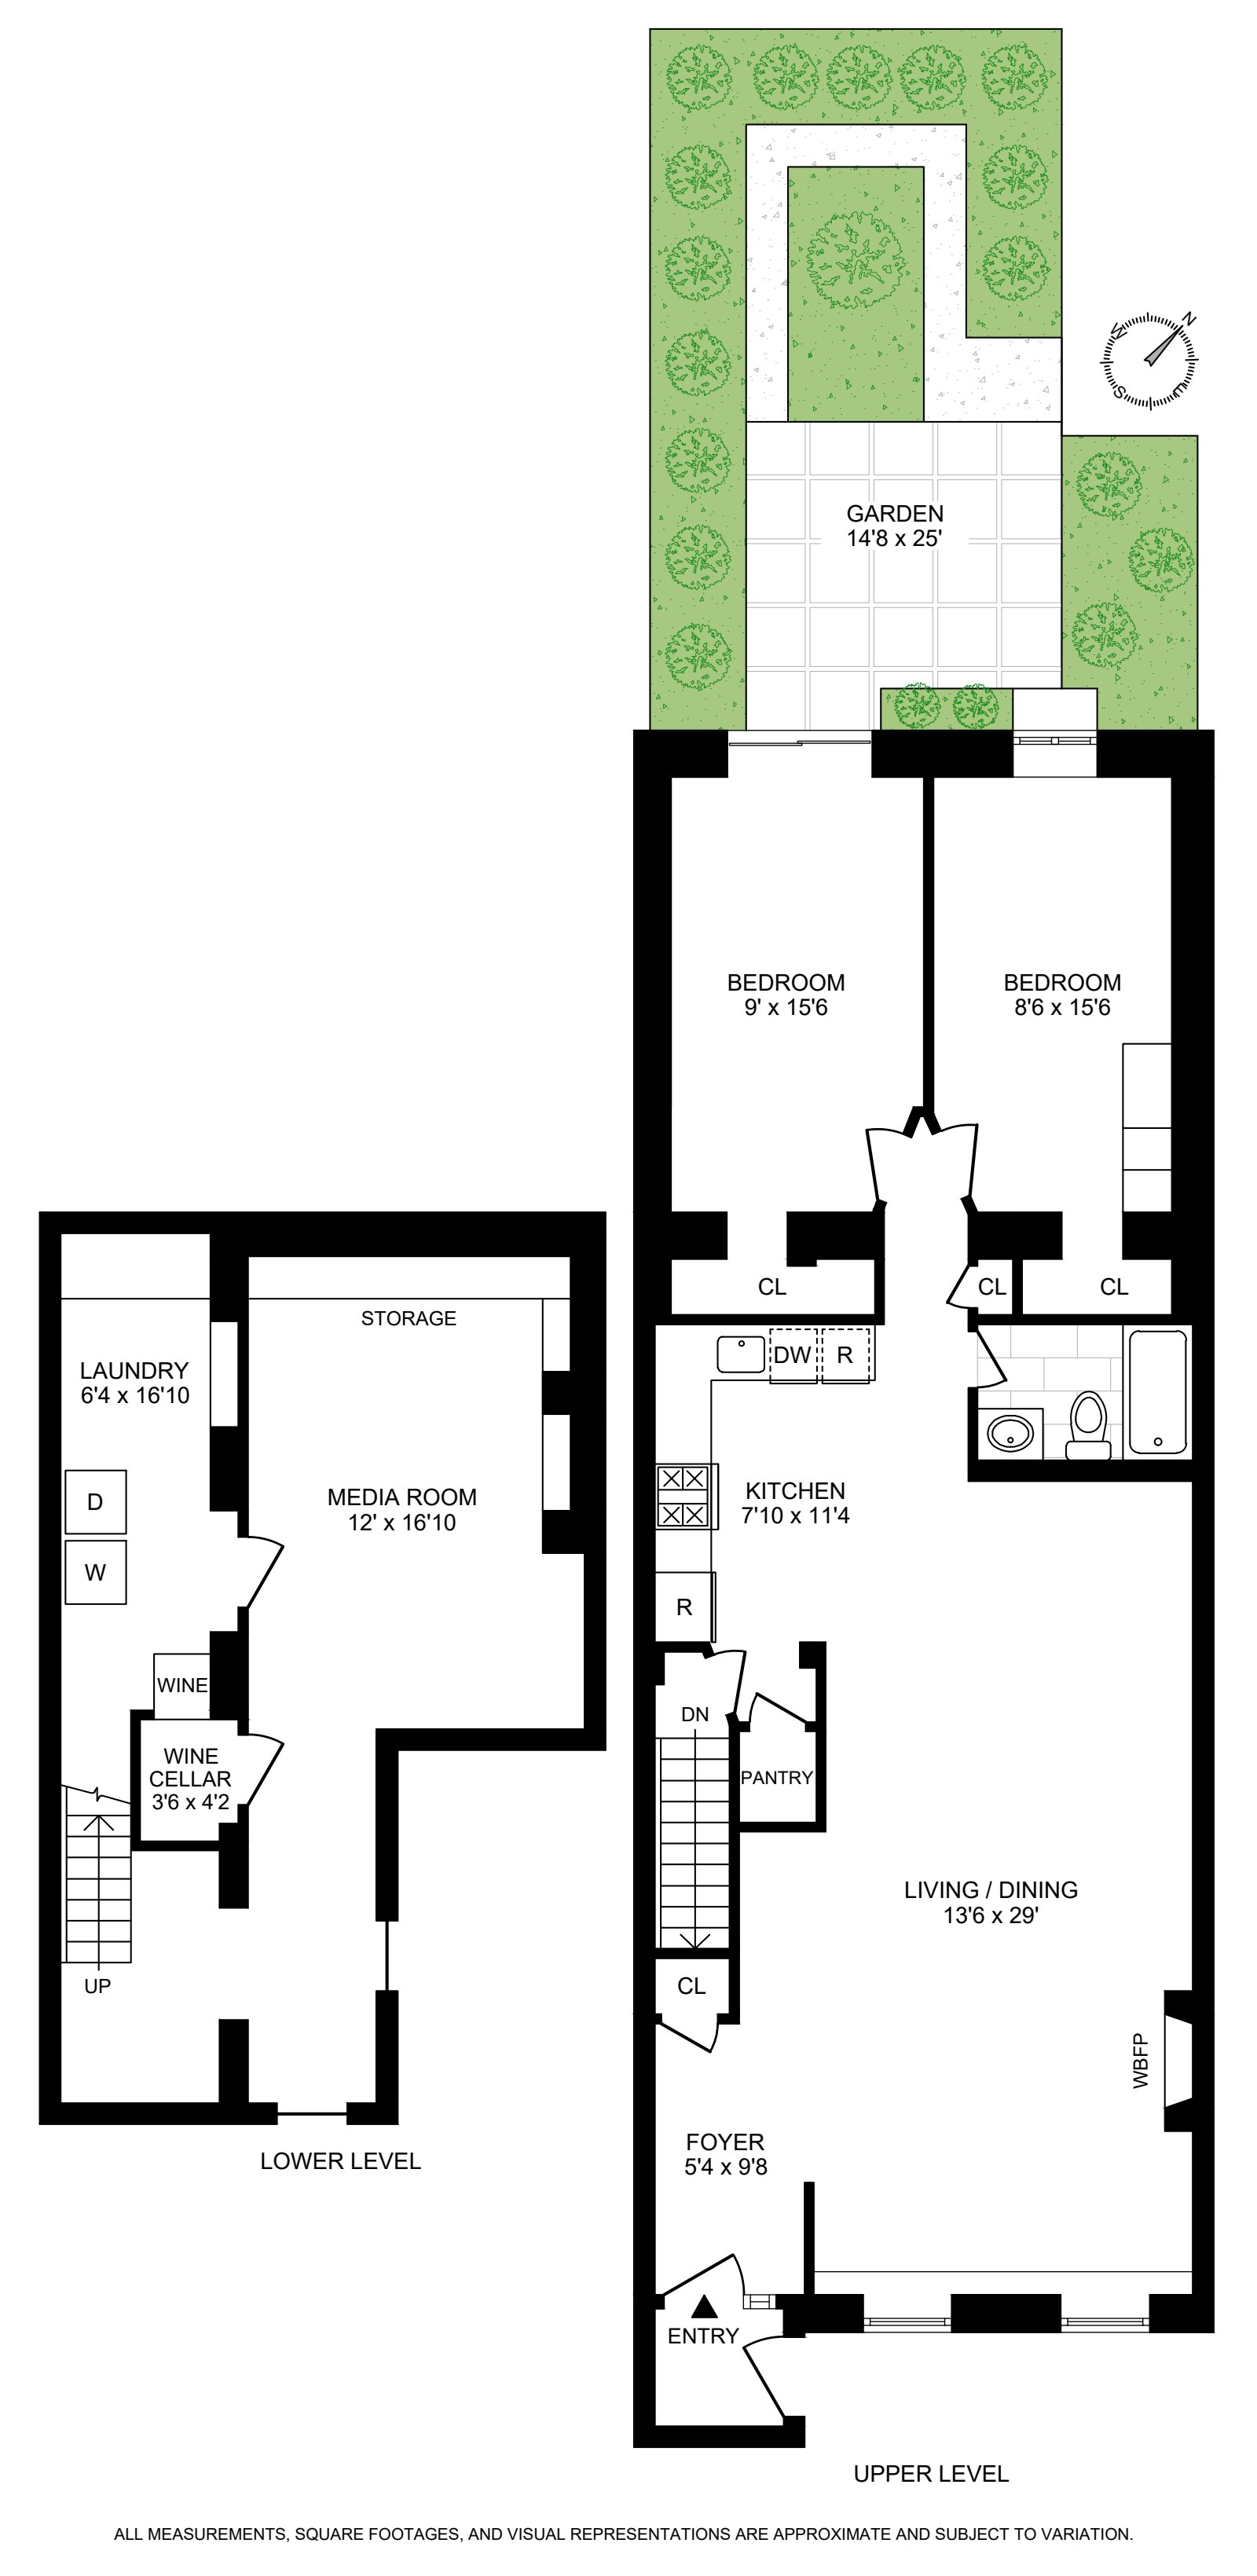 Floorplan for 44 Tompkins Place, 1